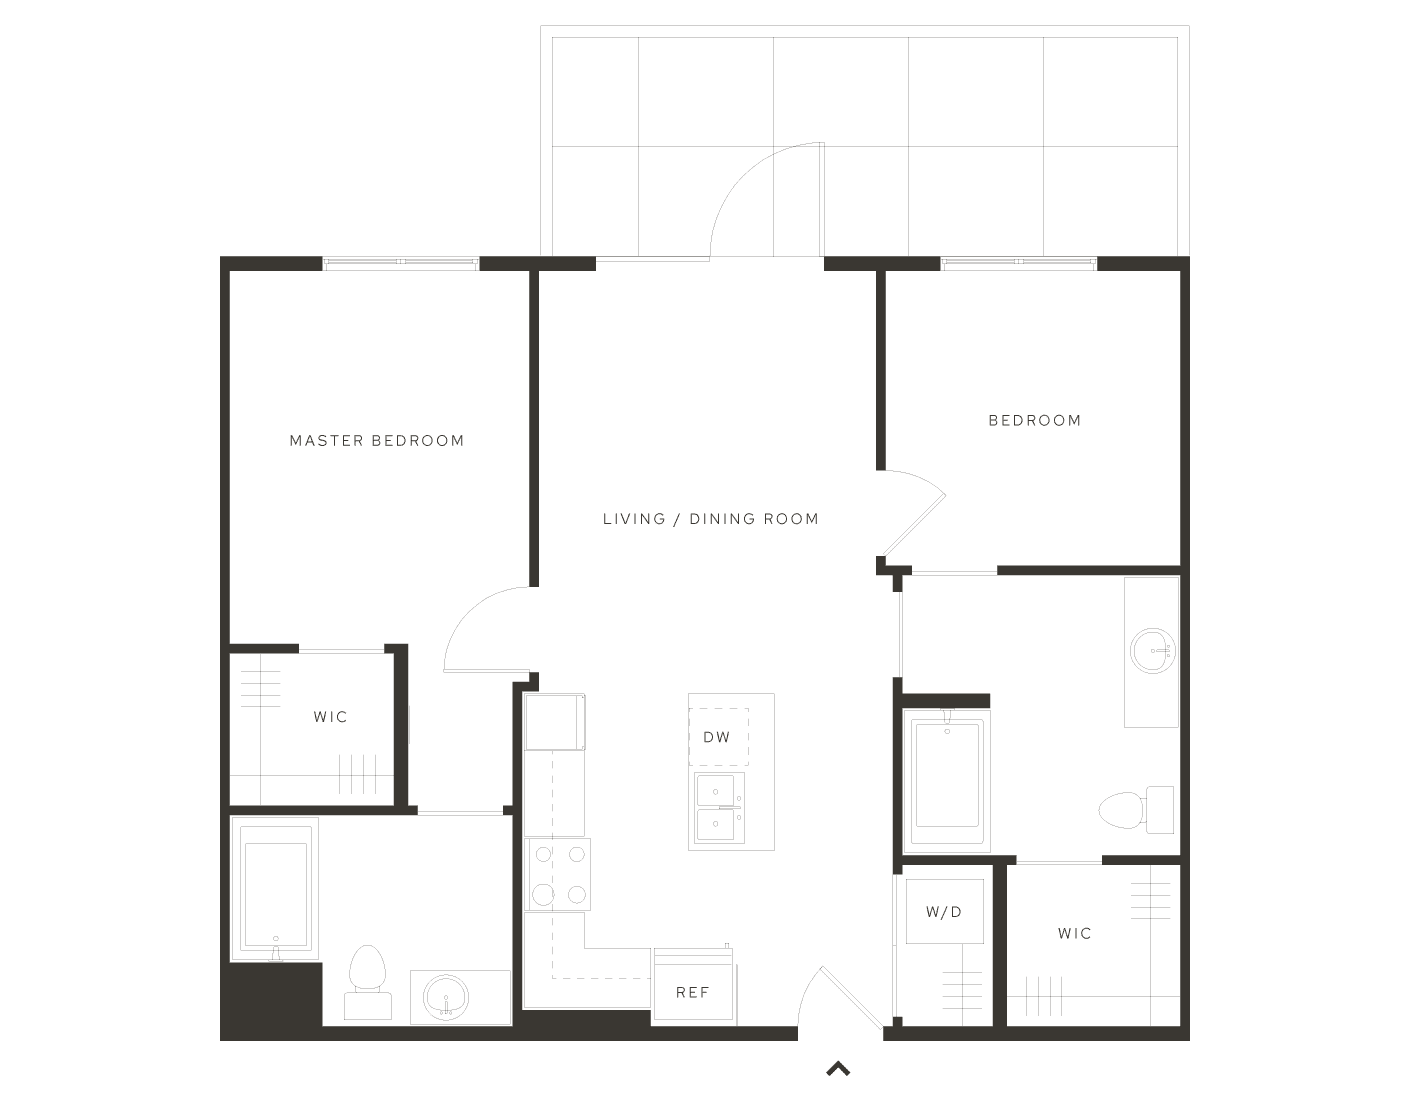 2-bedroom apartment floor plan at Salt Lake City's luxury apartment community Avia